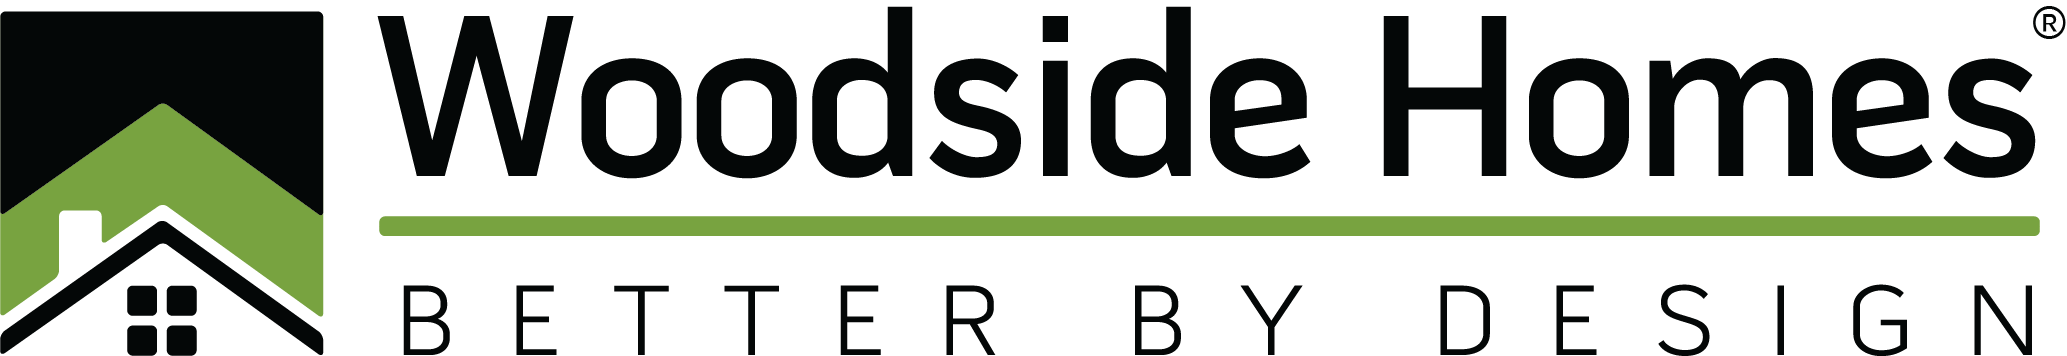 Woodside Group company logo